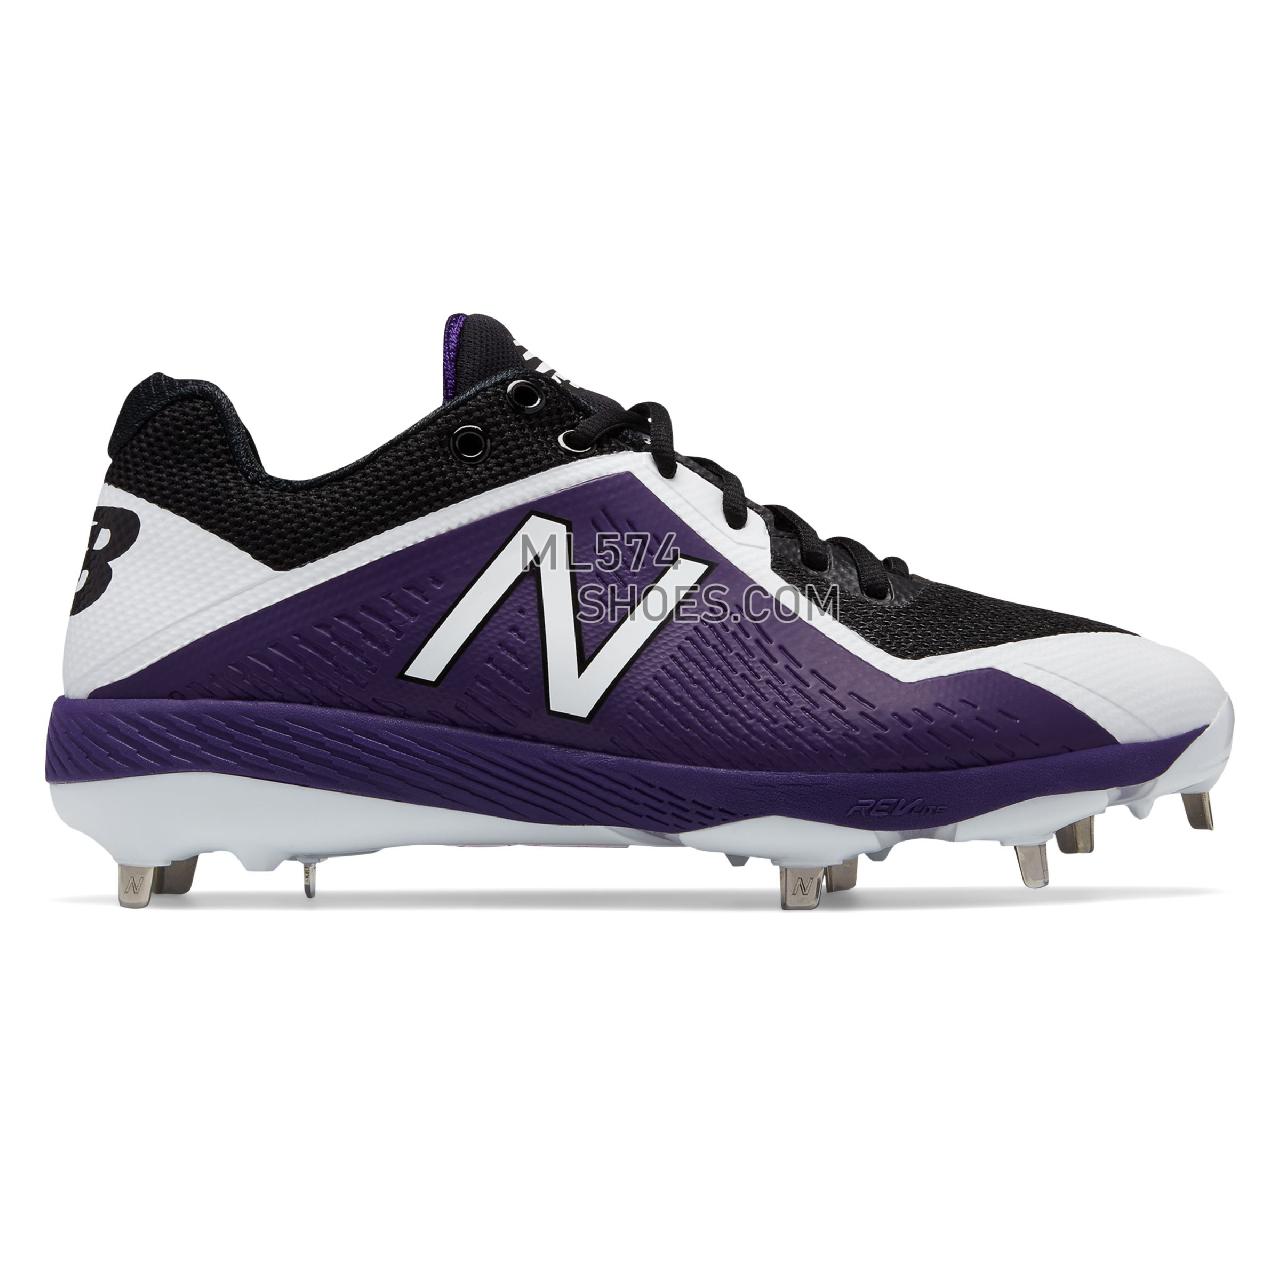 New Balance 4040v4 - Men's 4040 - Baseball Black with Purple - L4040BP4